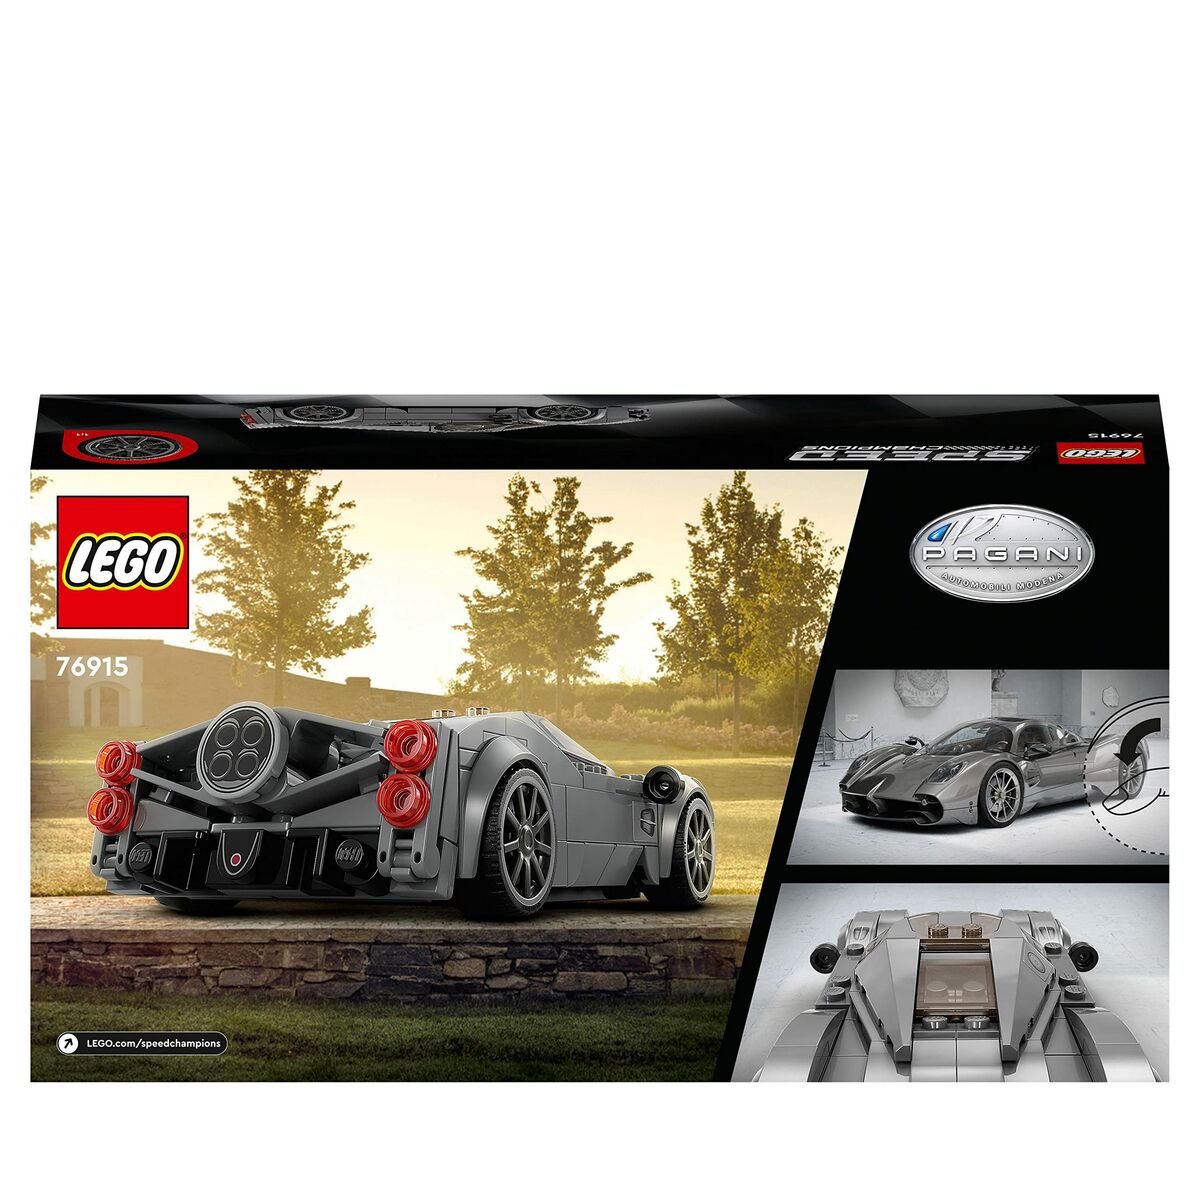 Byggsats Lego Speed Champions Pagani Utopia 76915-Leksaker och spel-Lego-peaceofhome.se